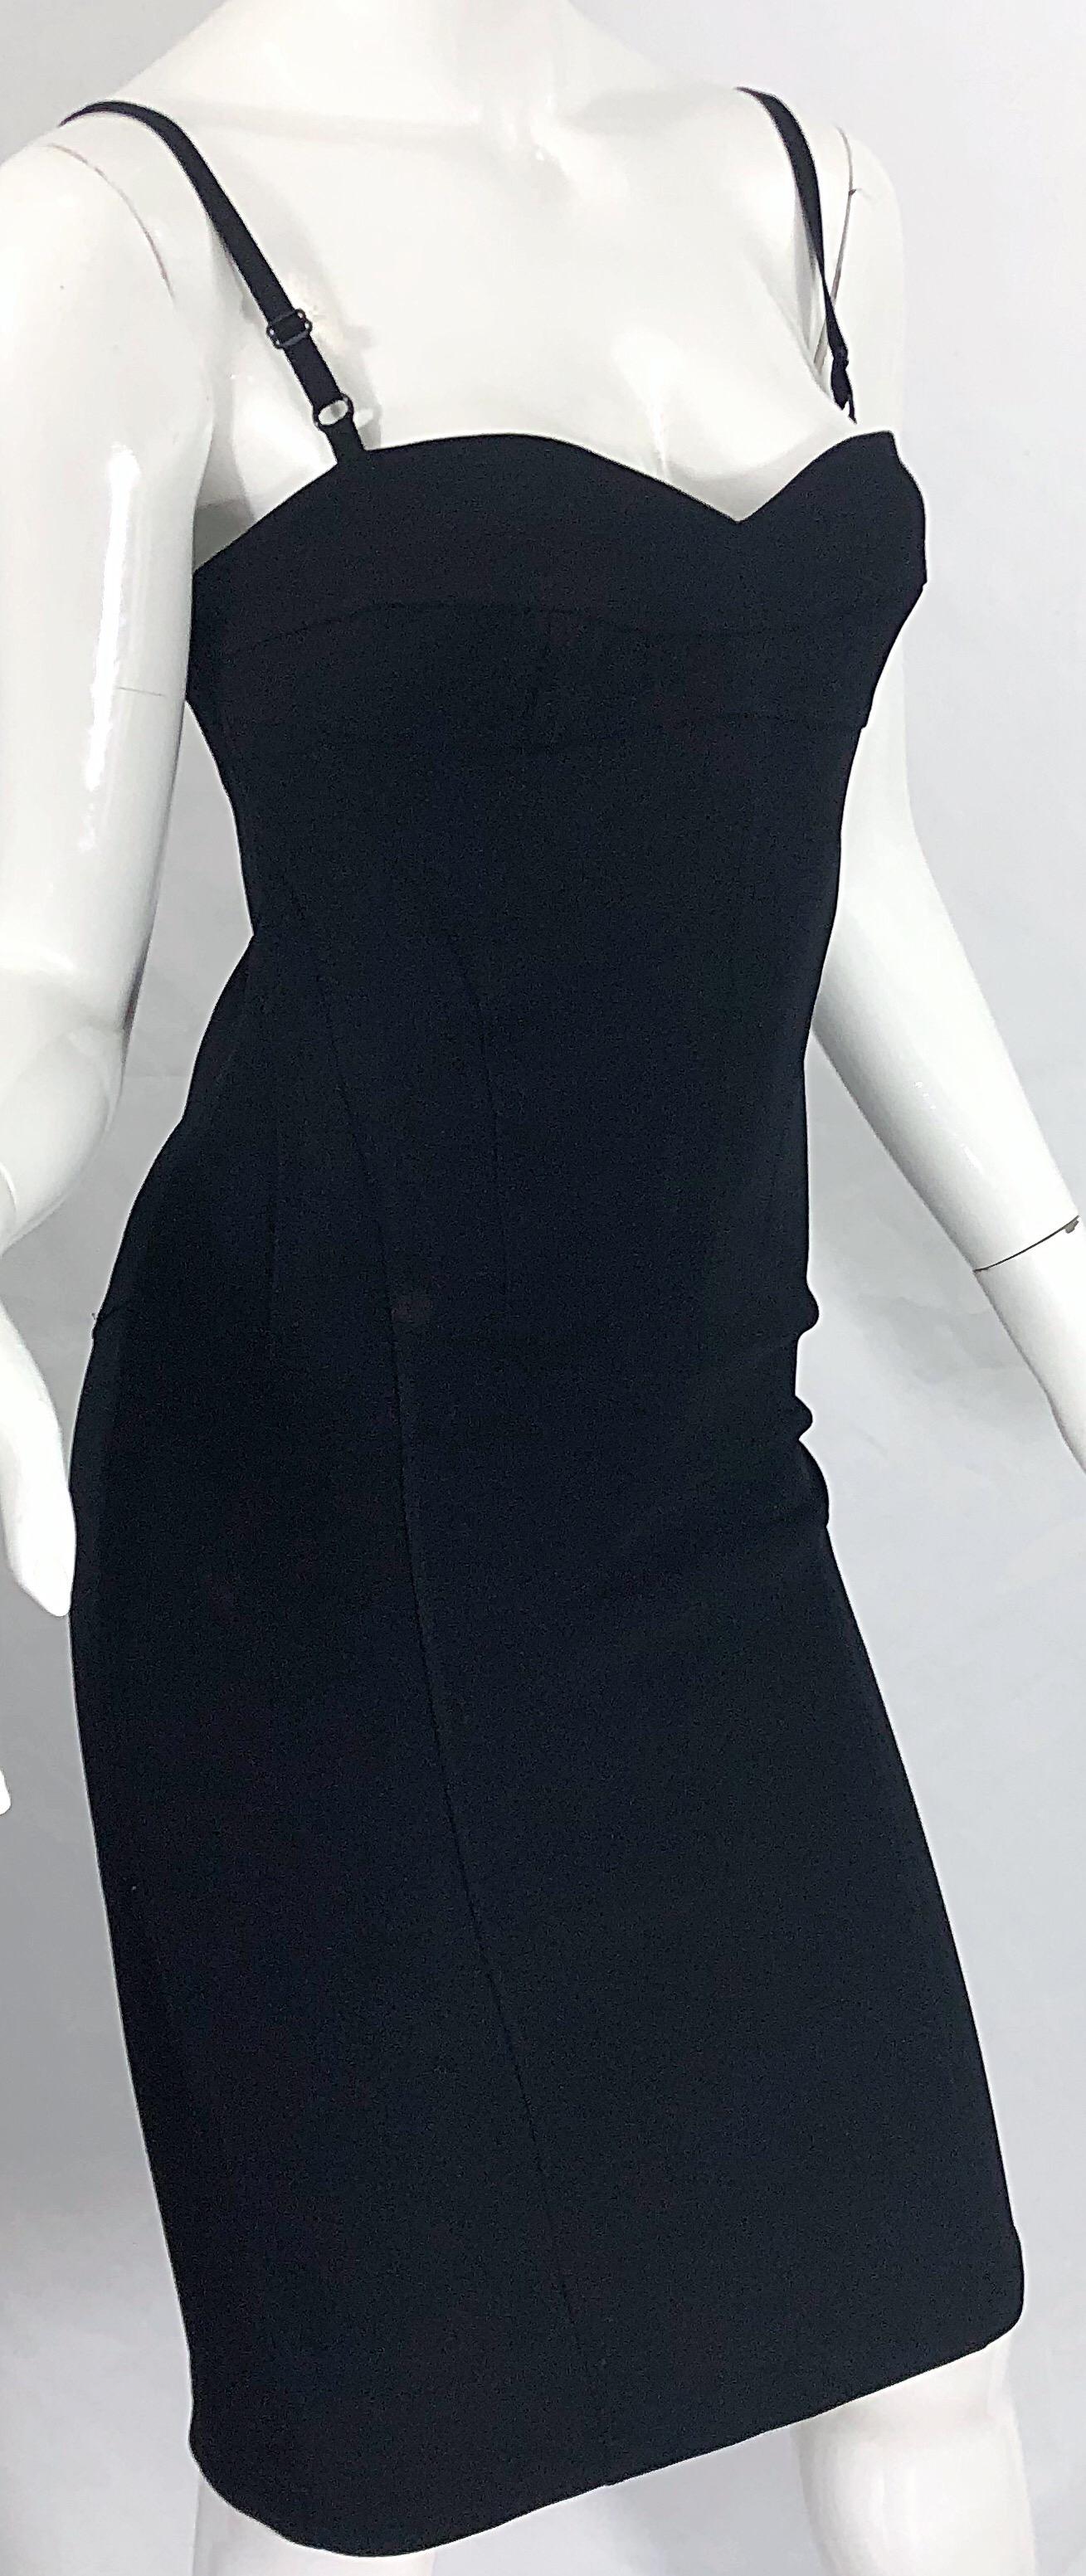 Women's 1990s Dolce & Gabbana Black Corset Dress Size 42 US 6 - 8 Vintage 90s Iconic LBD For Sale